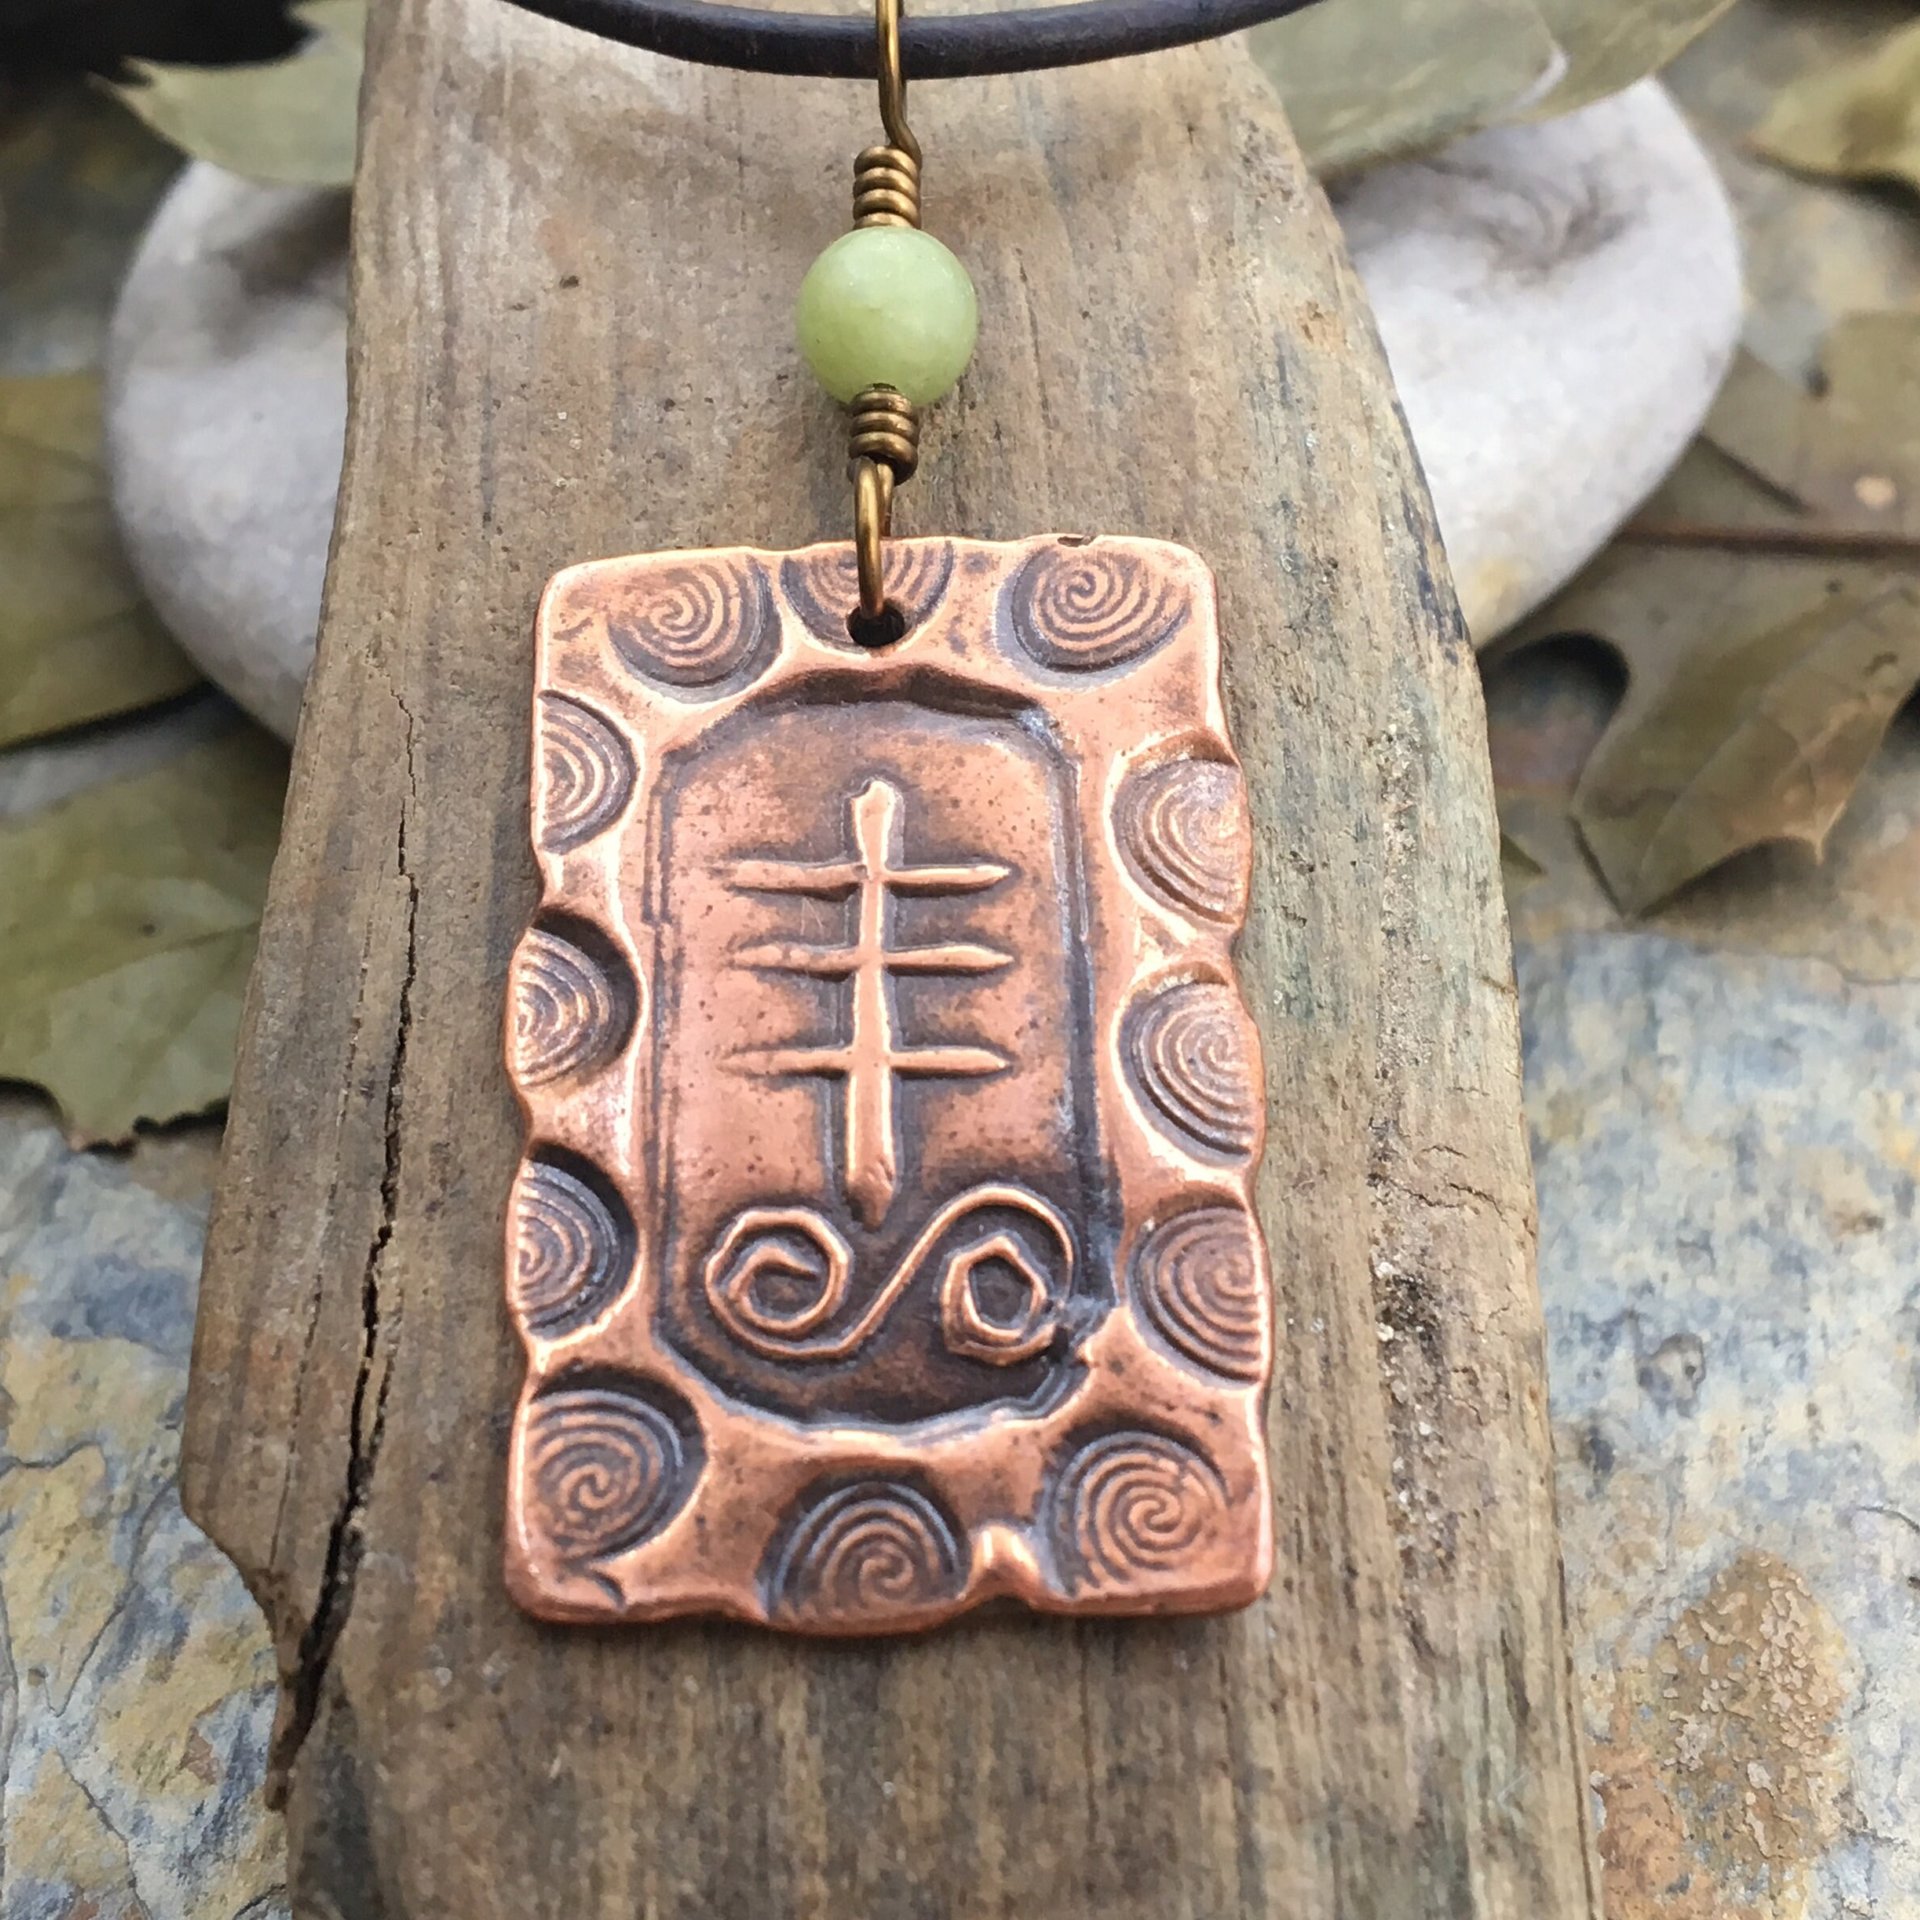 Heather Ogham Charm, Copper Pendant, Connemara Marble, Hand Carved Art, Druid Sacred Trees, Leather & Vegan Cords, Irish Celtic Spirals